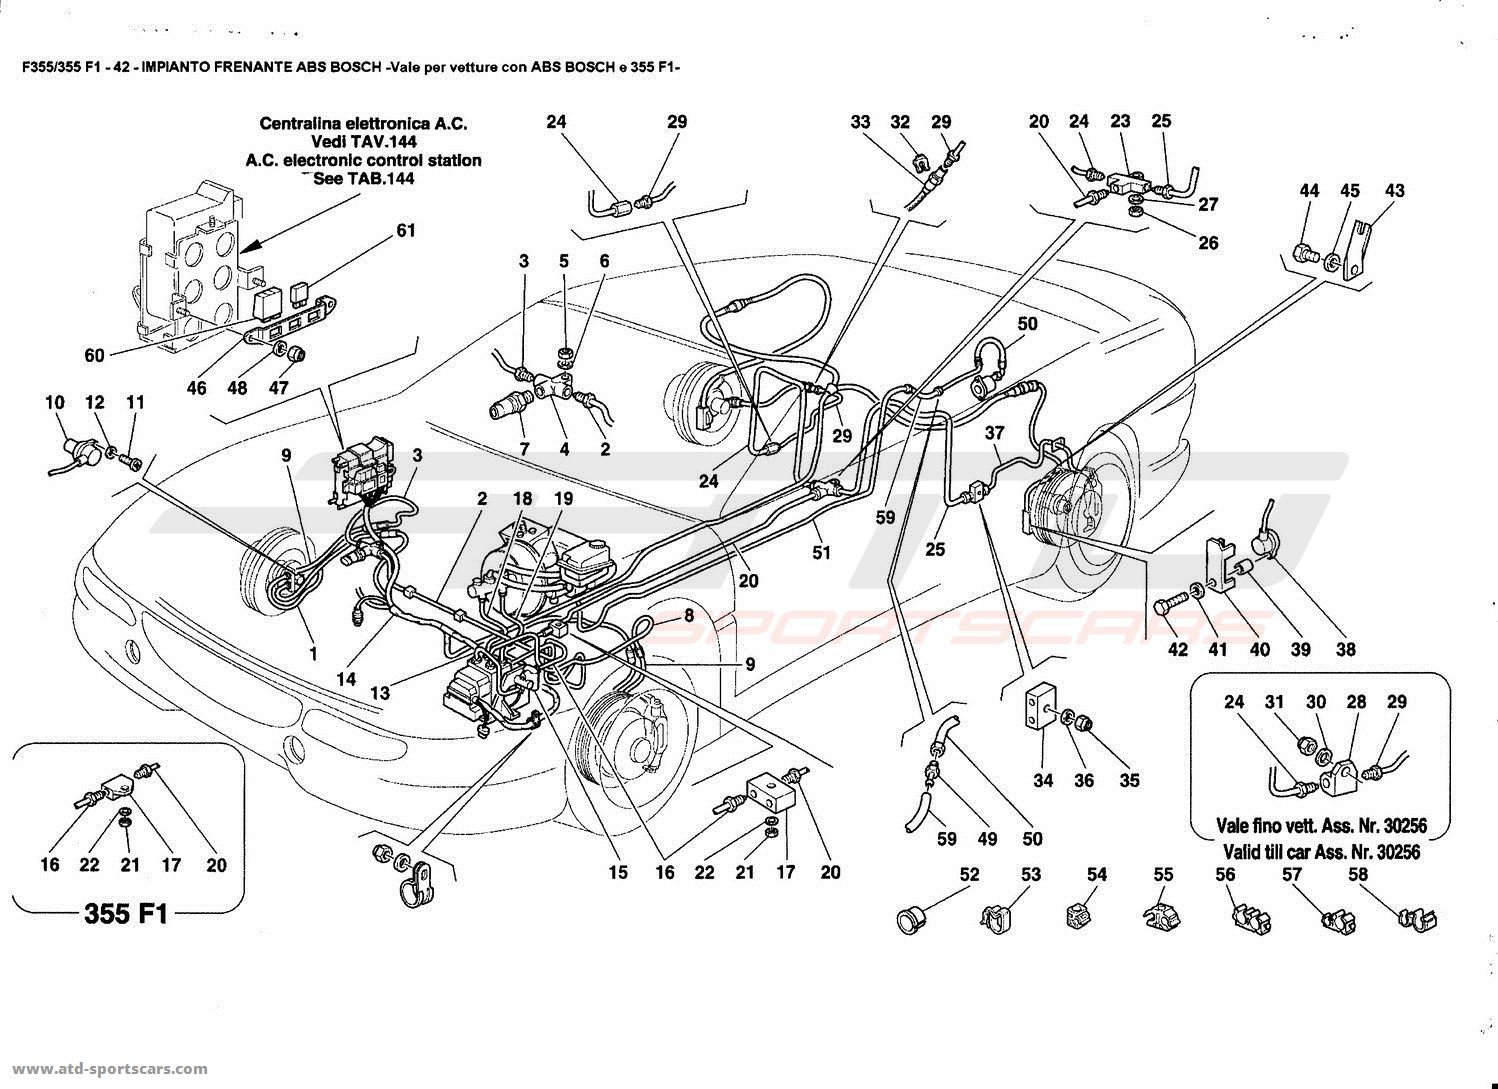 Ferrari F355 - 5.2 ET F1 ABS BOSCH BRAKE SYSTEM parts at ATD-Sportscars |  ATD-Sportscars